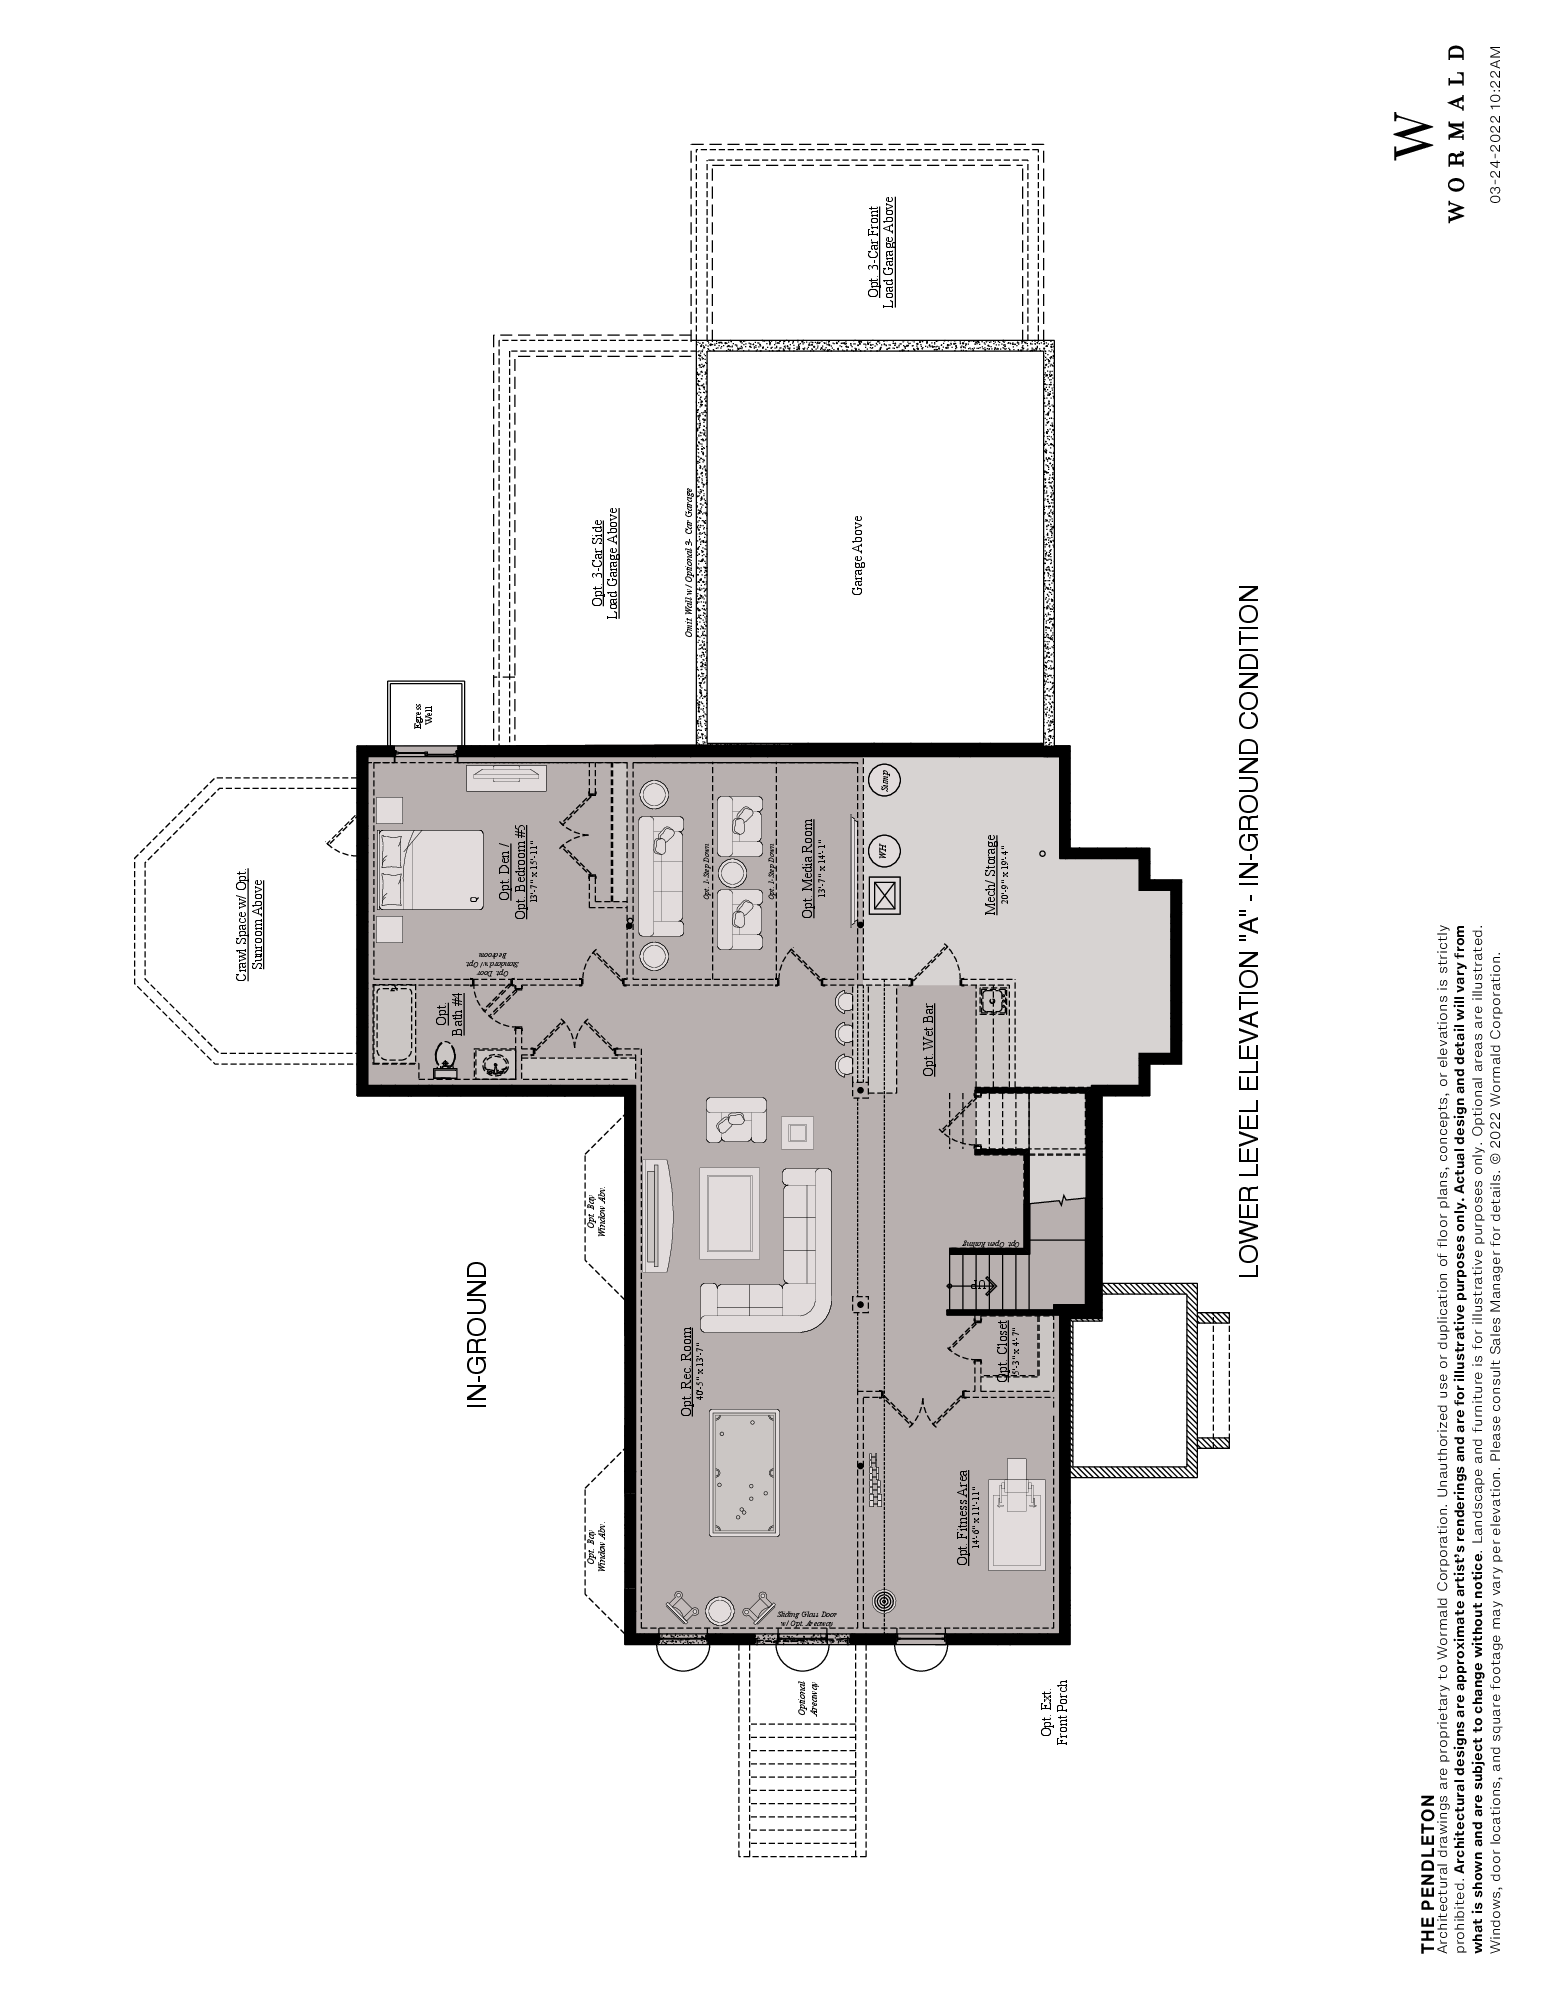 The Pendleton floor plan 7